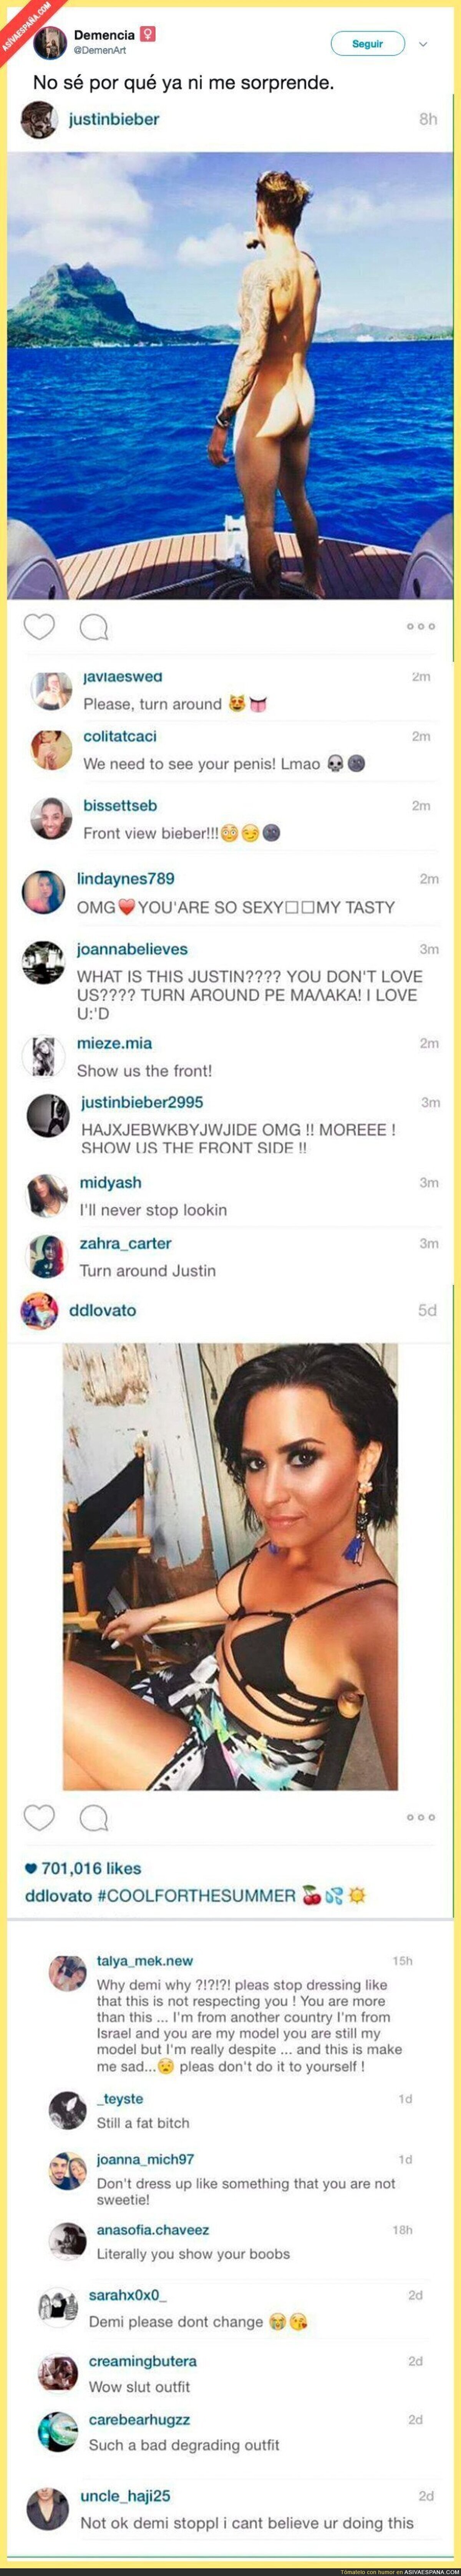 La diferencia de comentarios que recibe Justin Bieber totalmente desnudo y otra foto de Demi Lovato